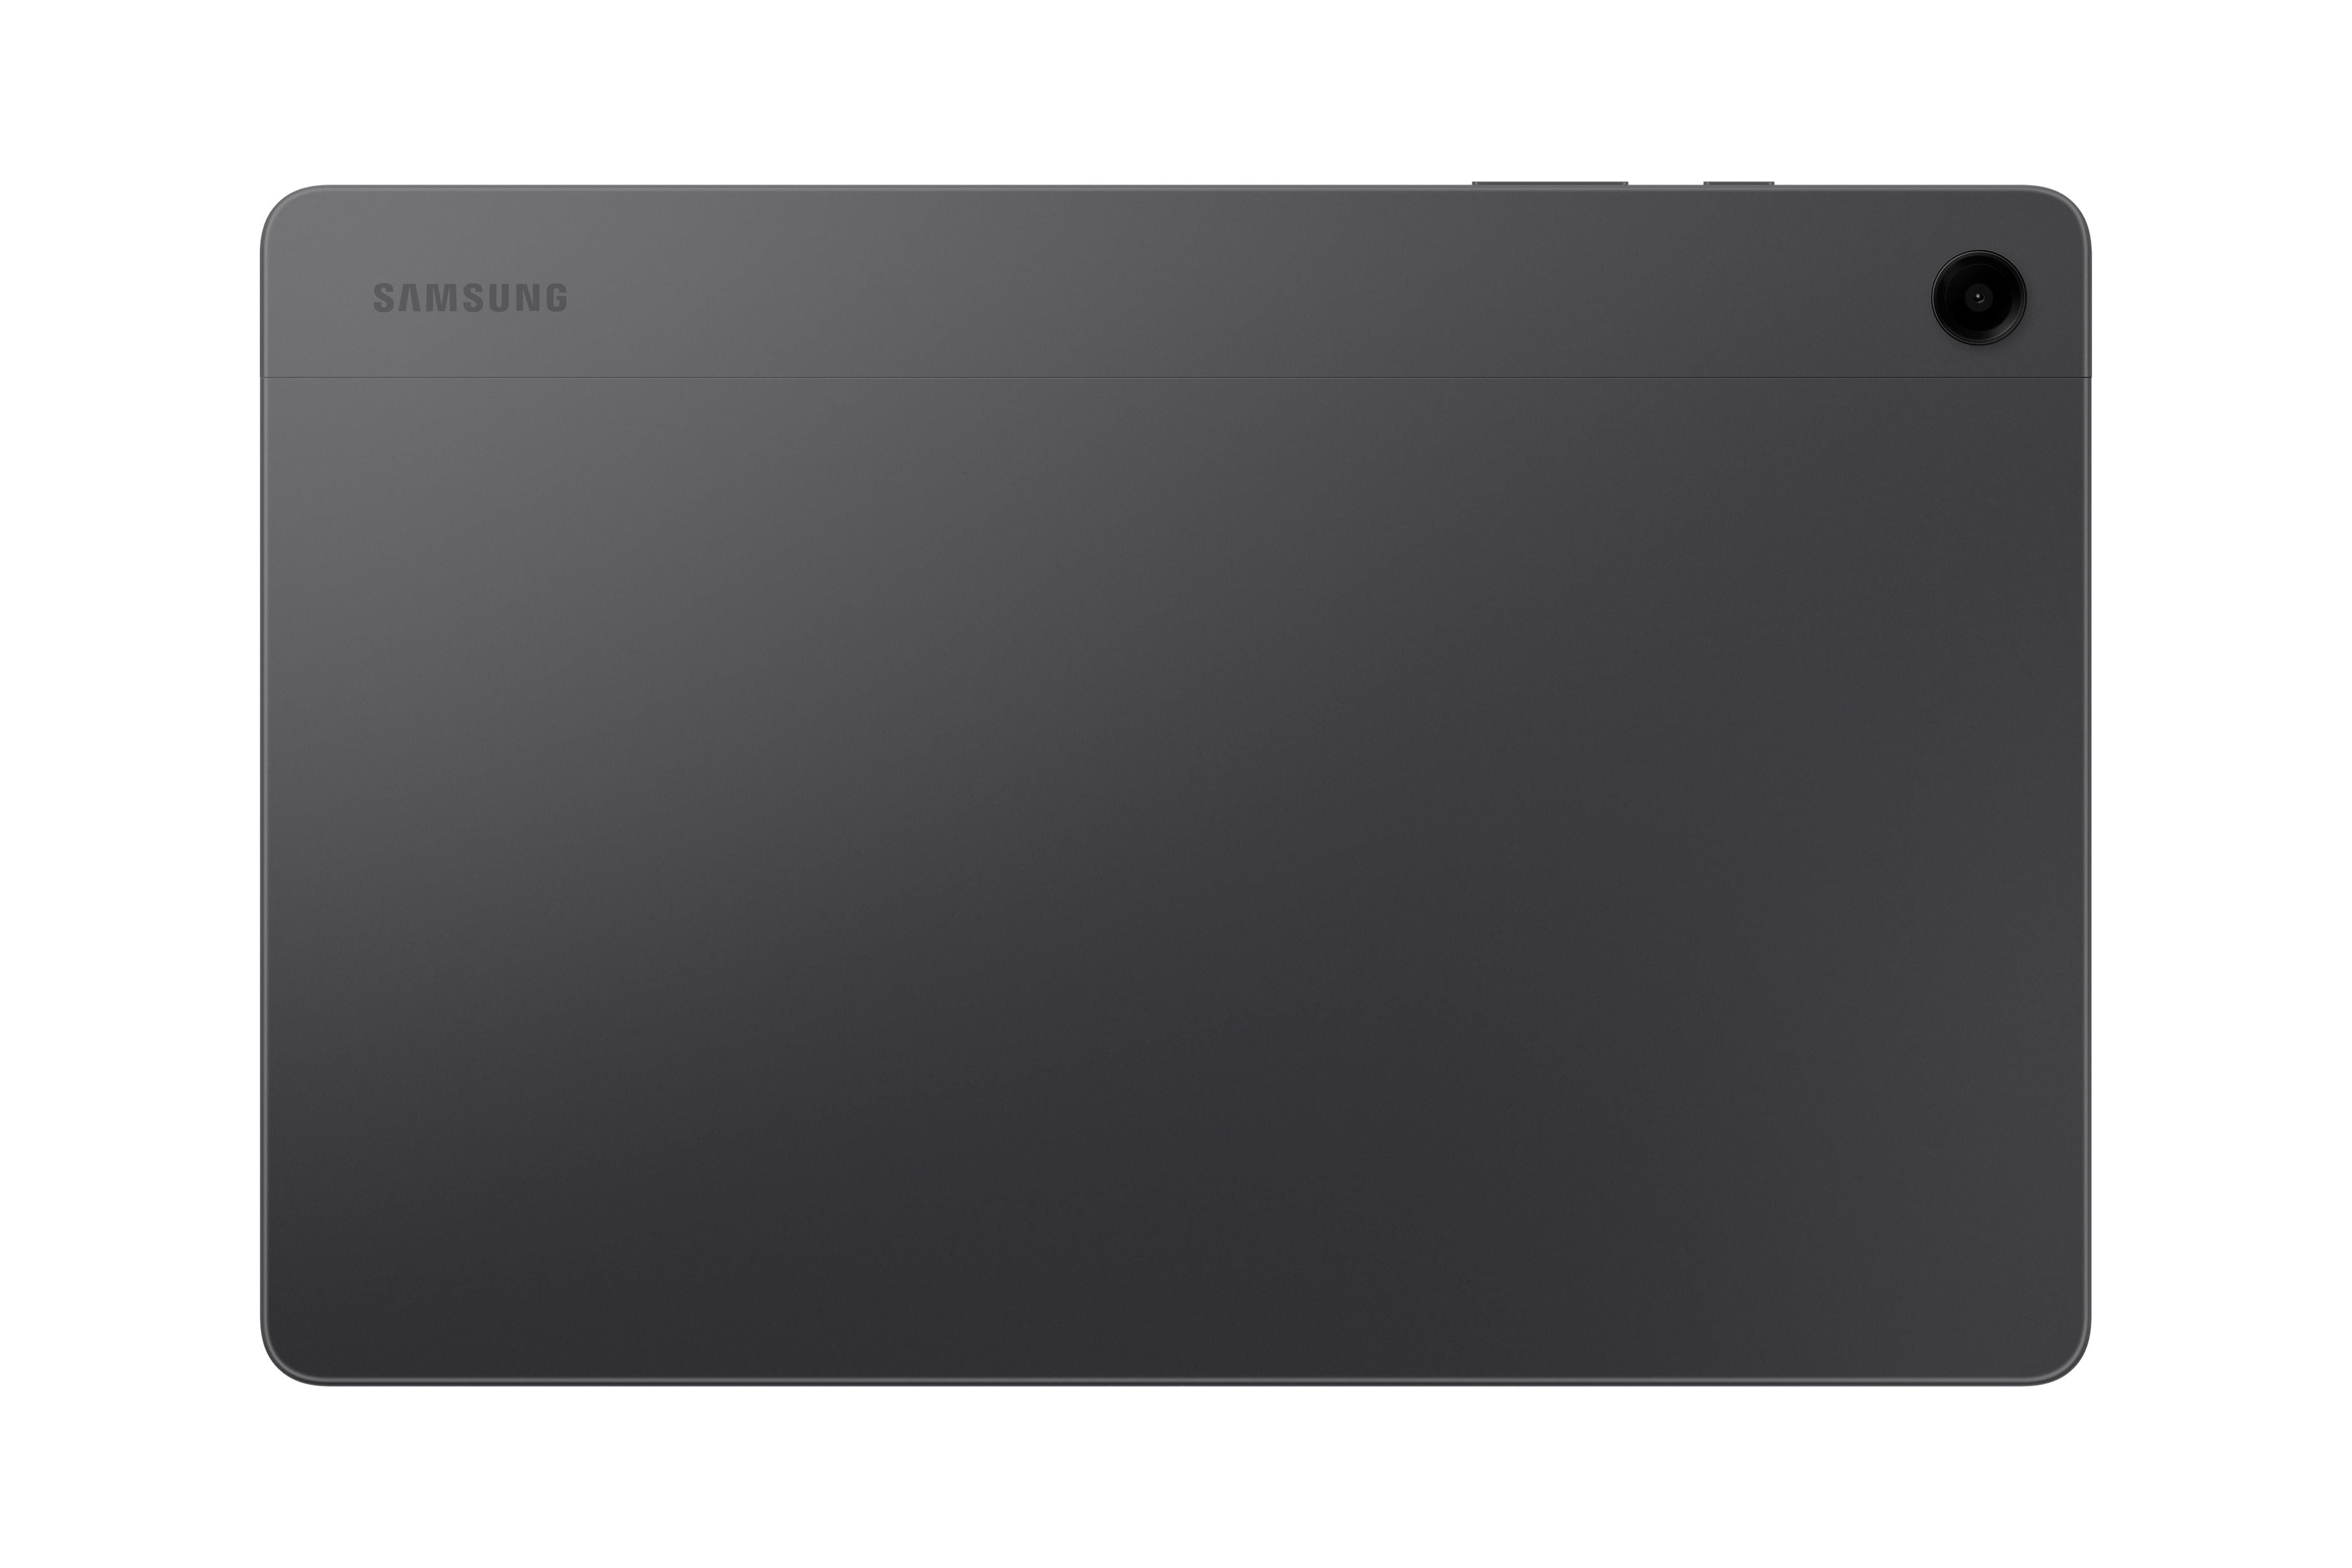 Tablette WiFi Samsung Galaxy Tab A9+ Plus 11 pouces | 64 Go 4 Go de RAM  (2023) Tout neuf